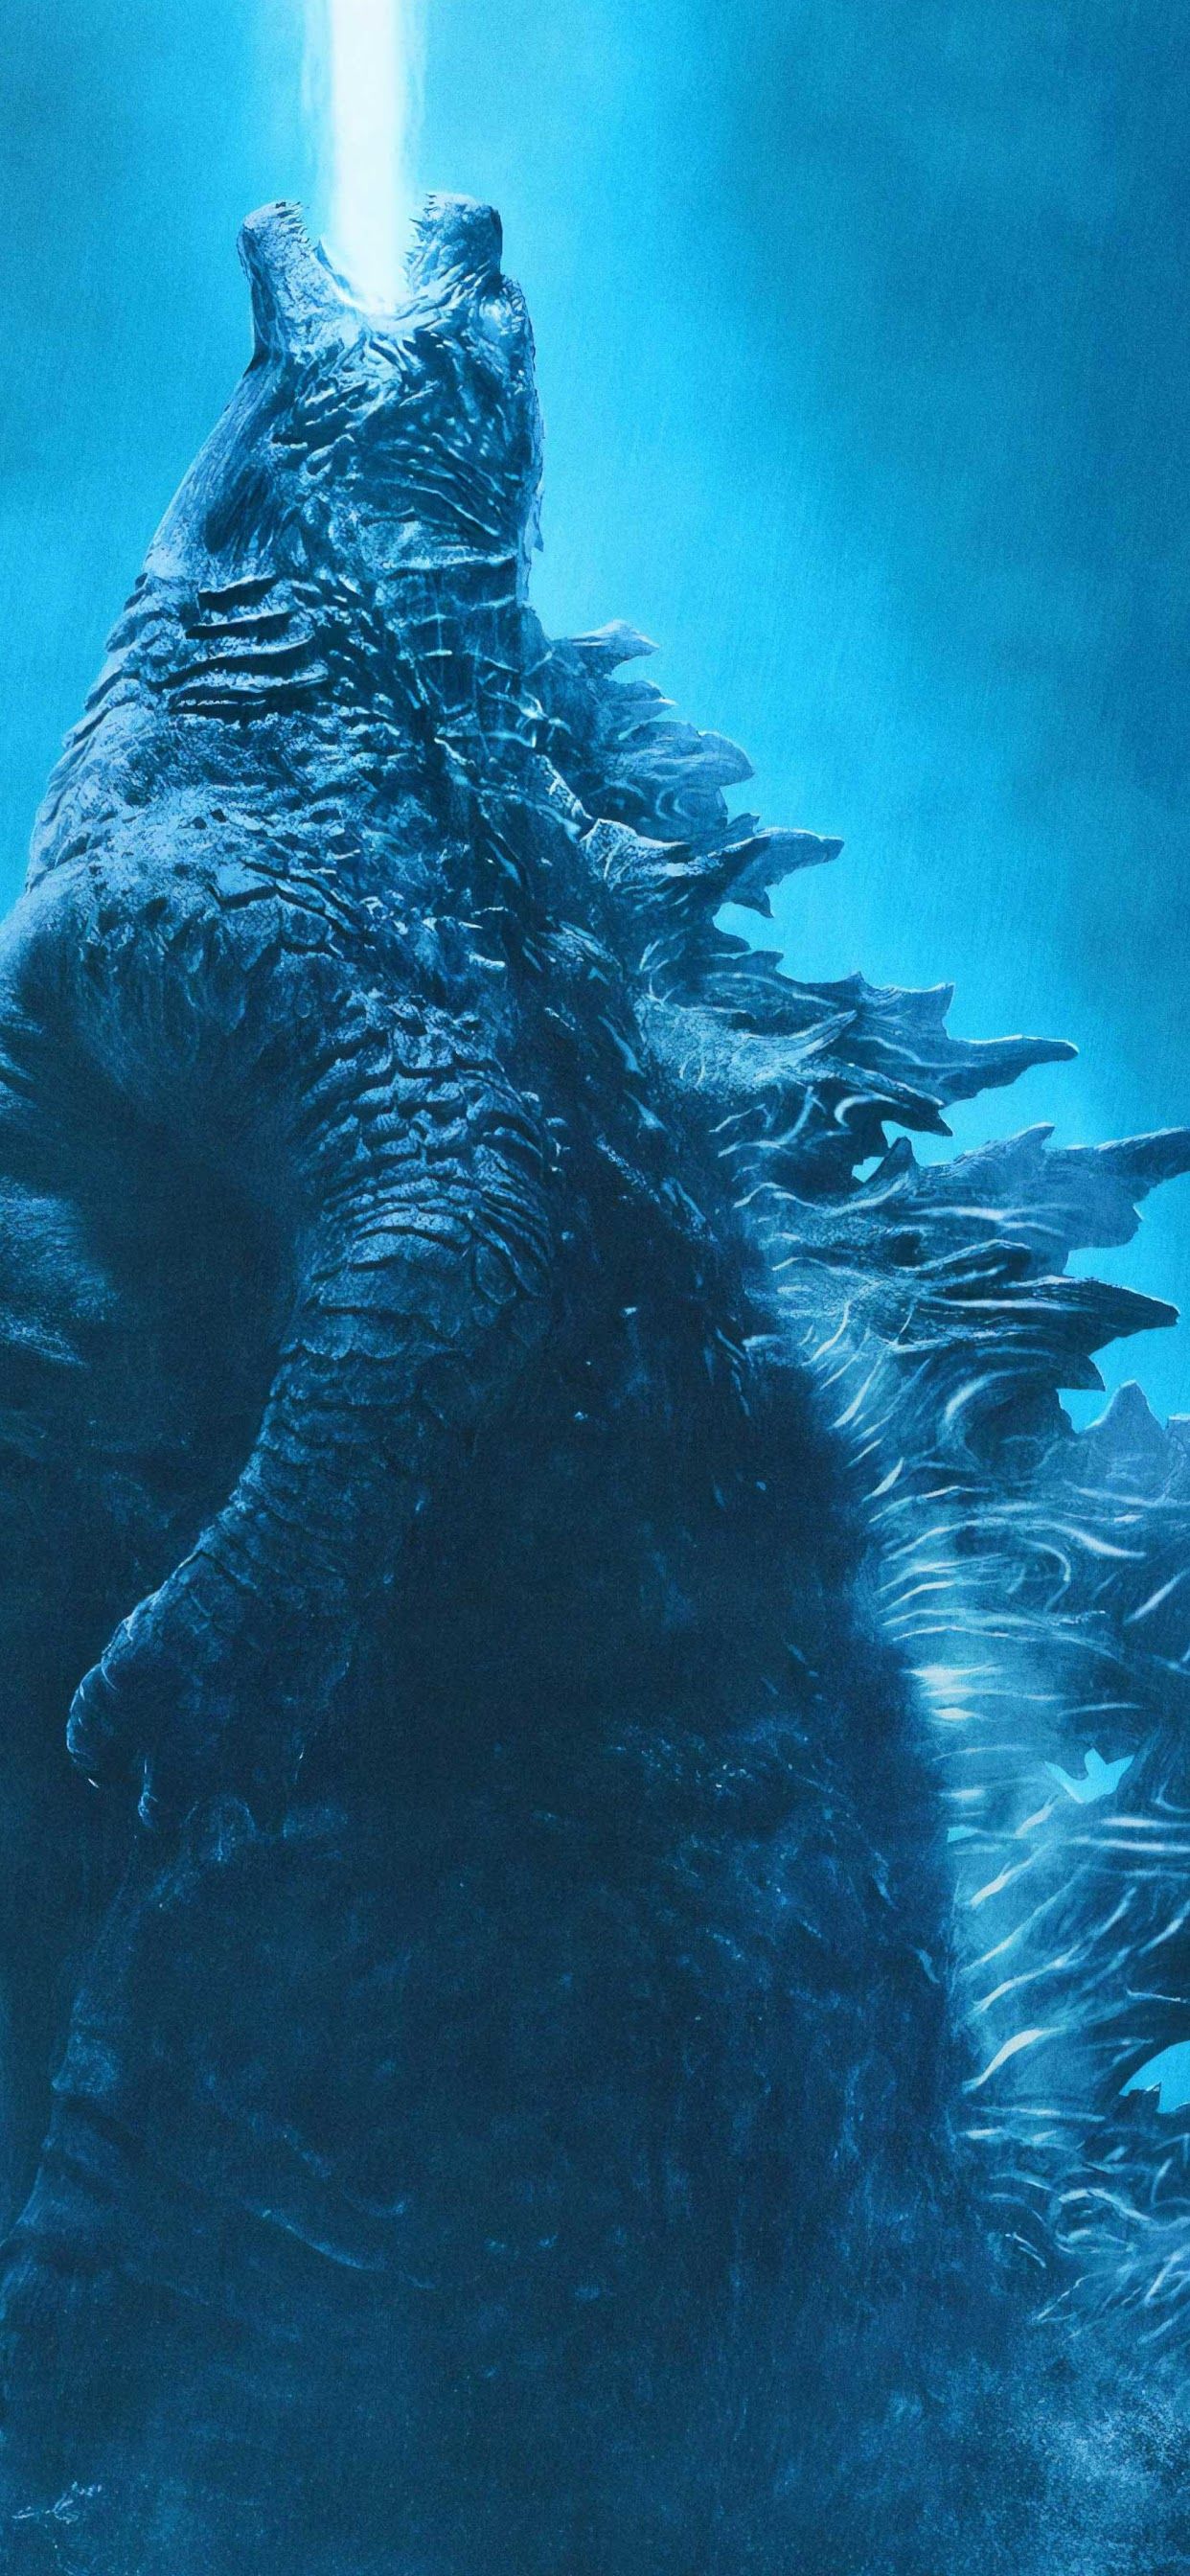 Godzilla Vs Kong  IPhone Wallpapers  iPhone Wallpapers